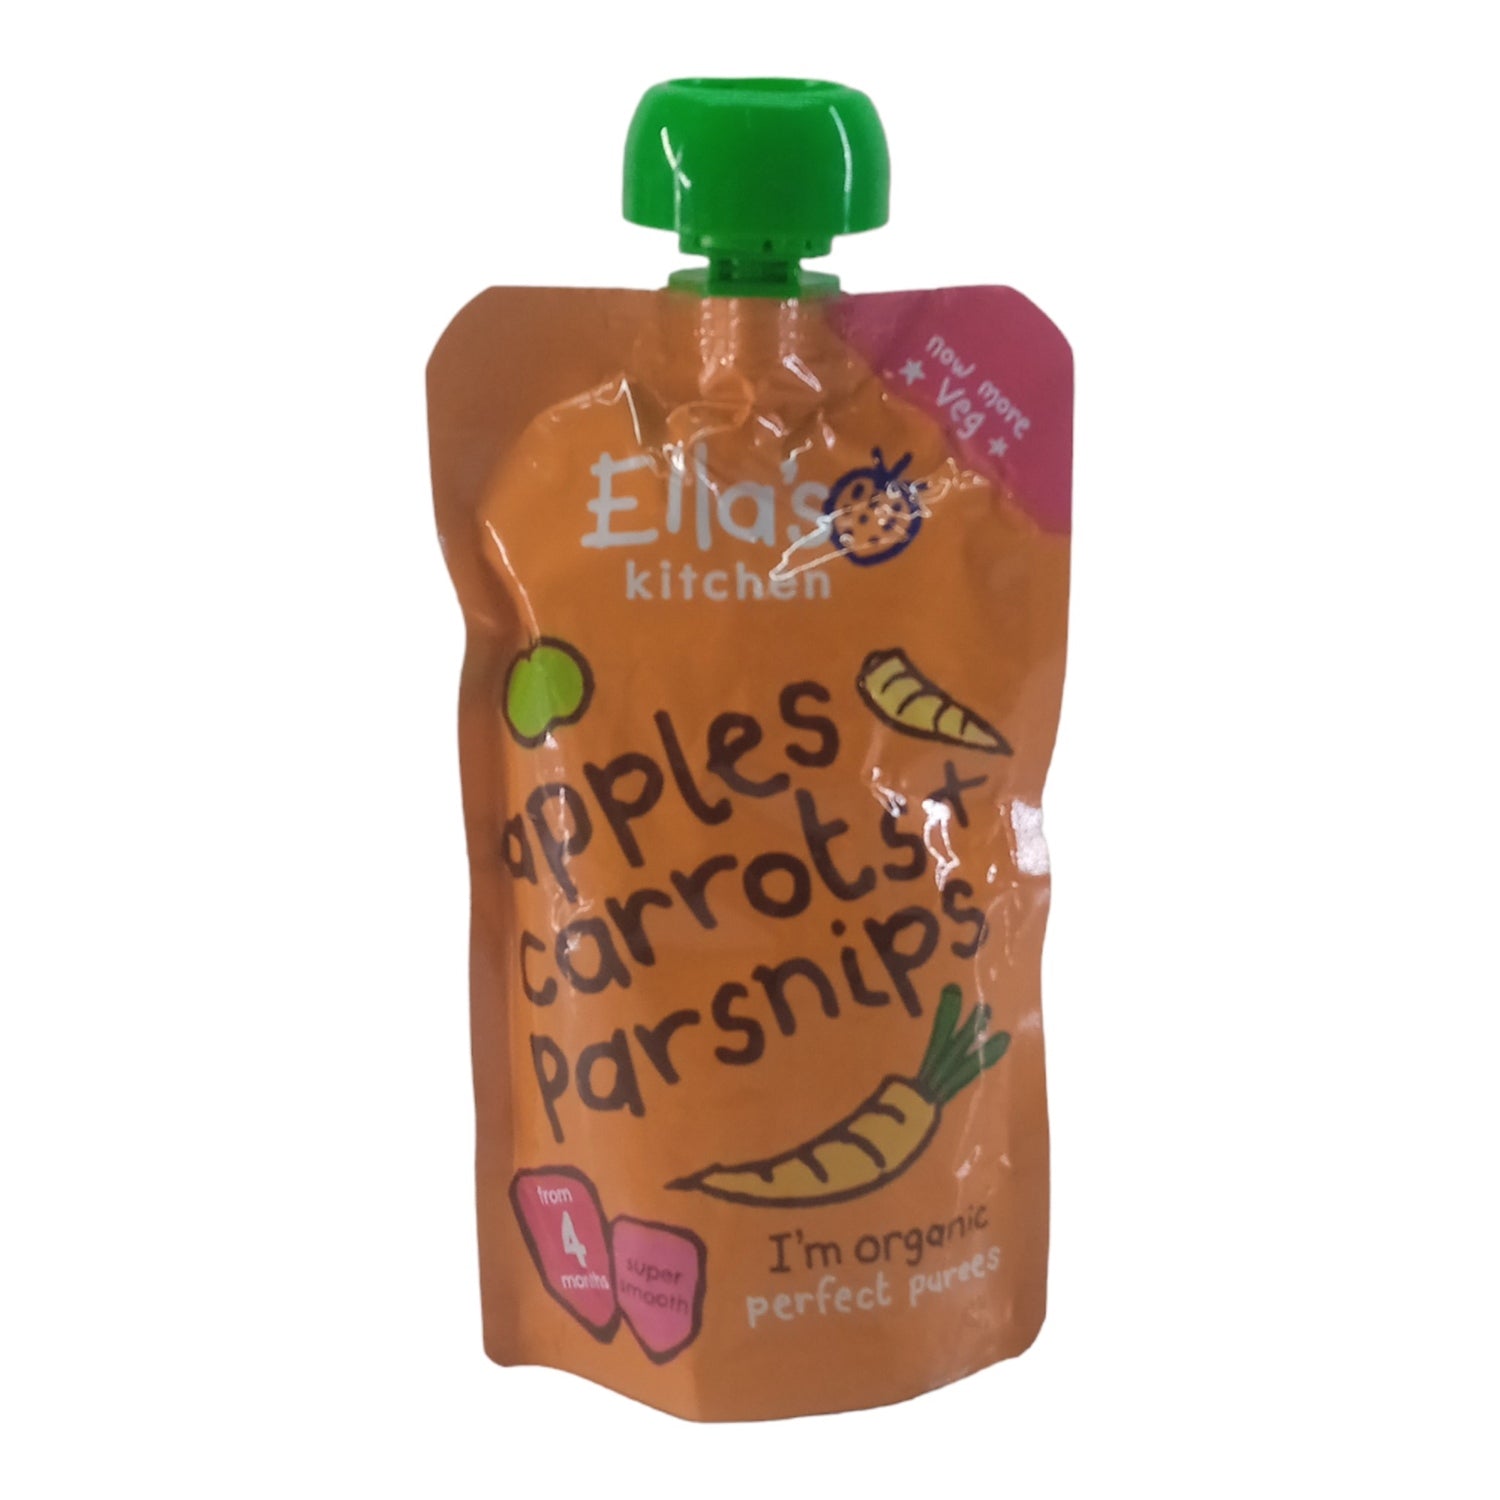 Ellas Kitchen Apples Carrots Parsnips - 120g